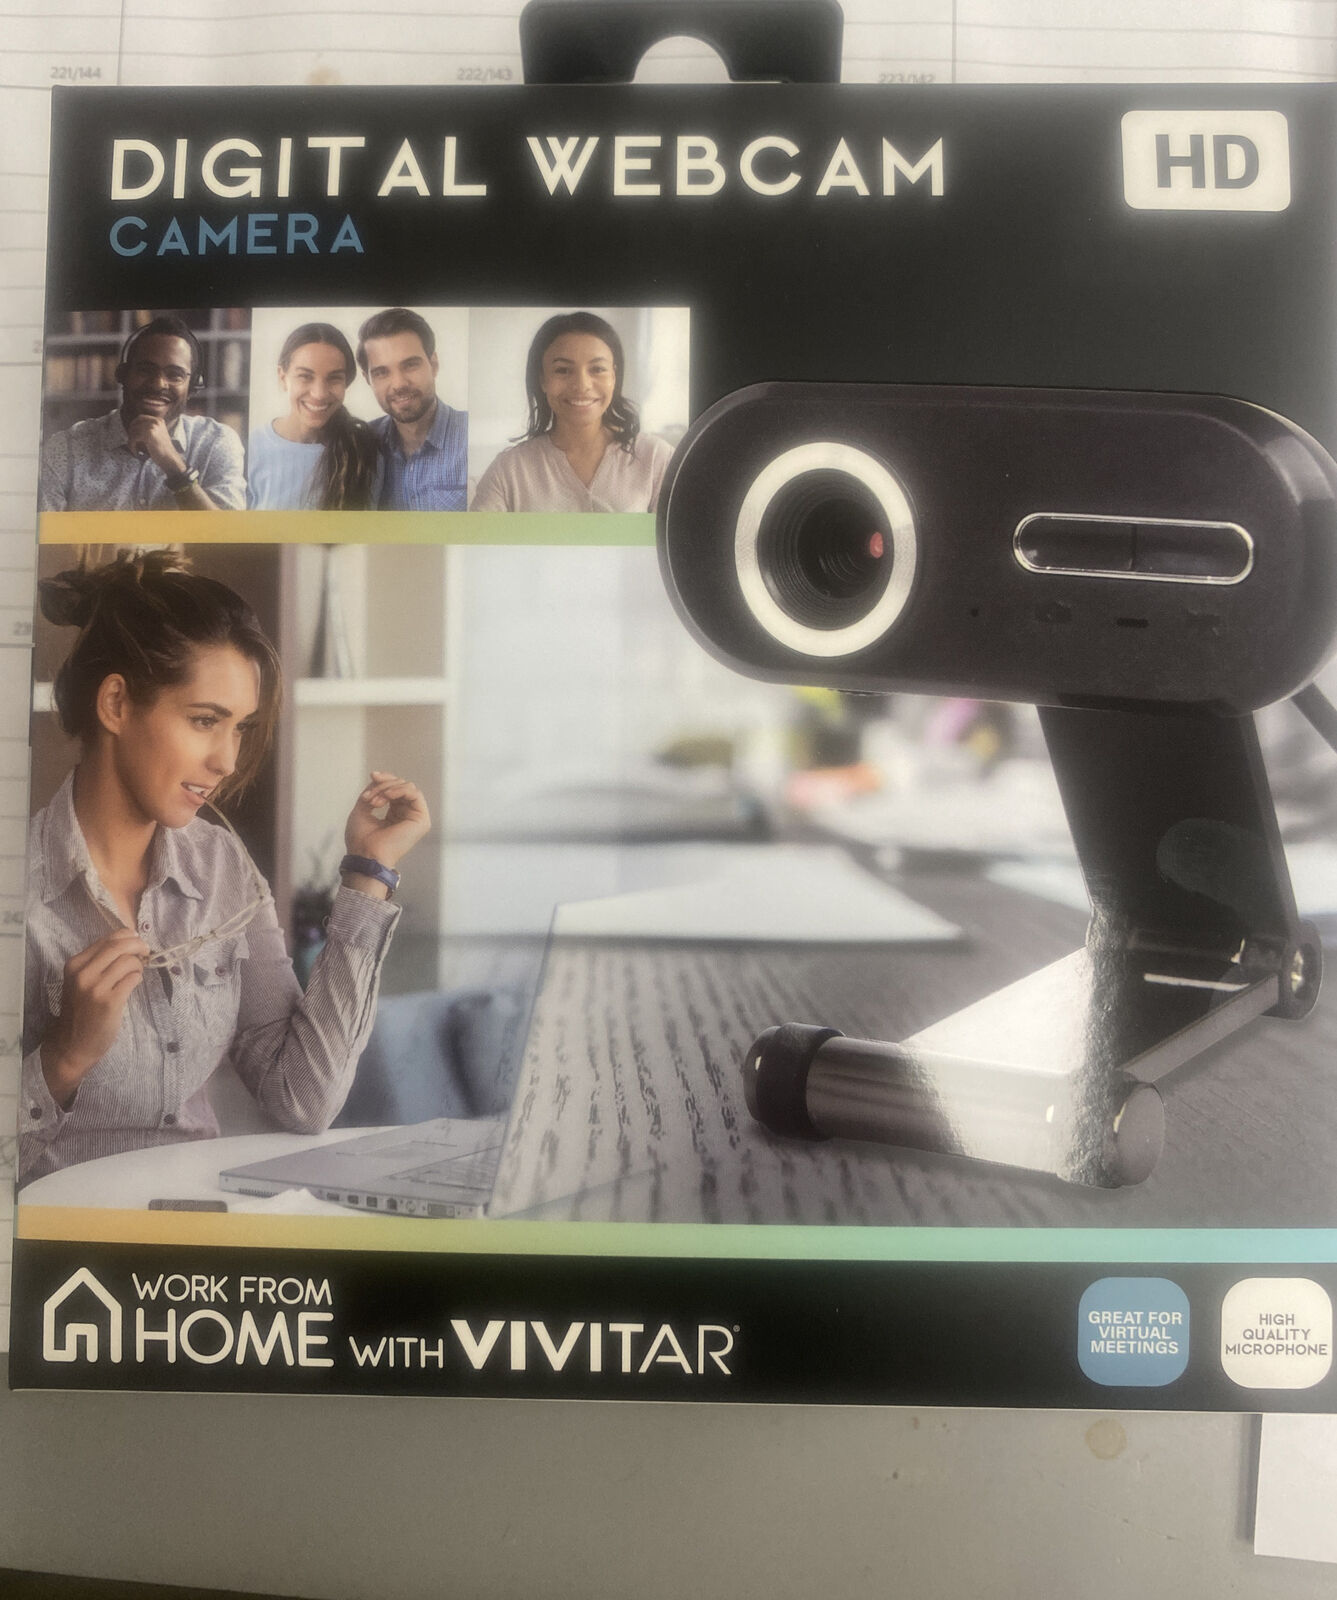 NEW Vivitar VWC104BLK HIGH quality Digital Web Camera And Microphone